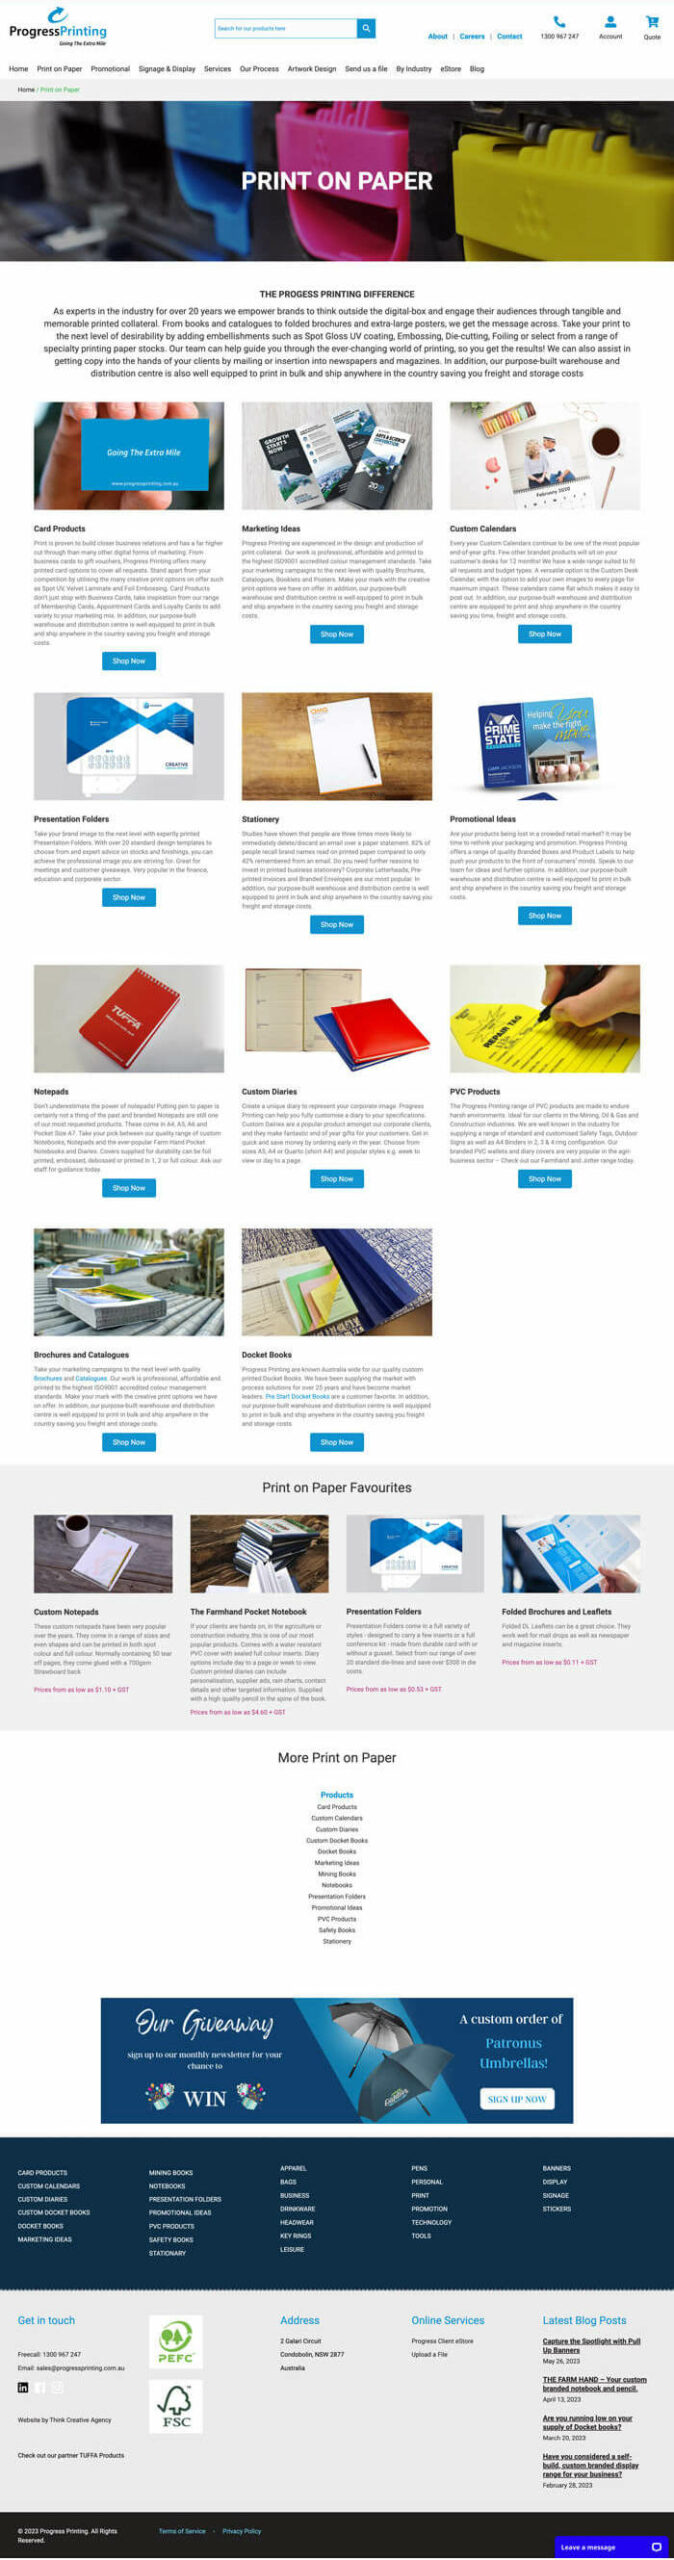 Progress Printing eCommerce website development print on paper